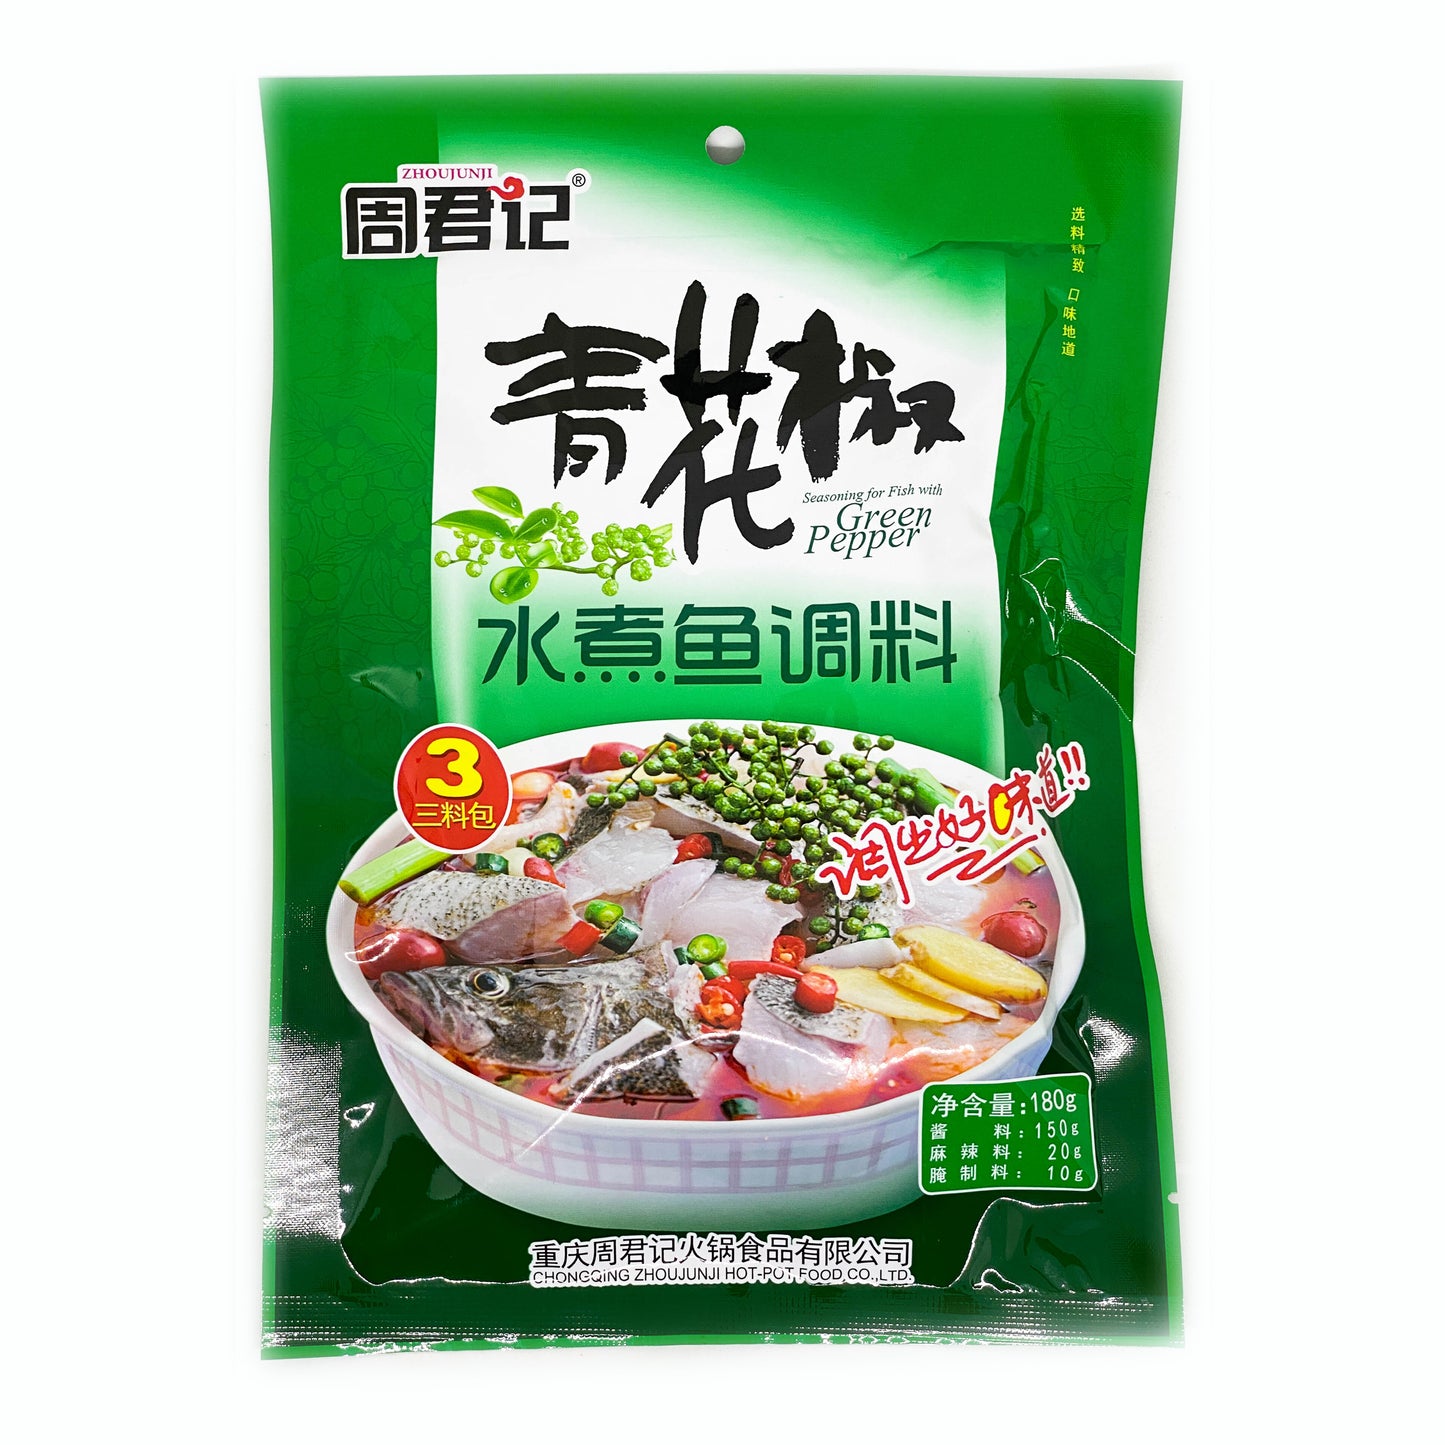 Seasoning for Fish Green Pepper 周君記 青花椒水煮魚